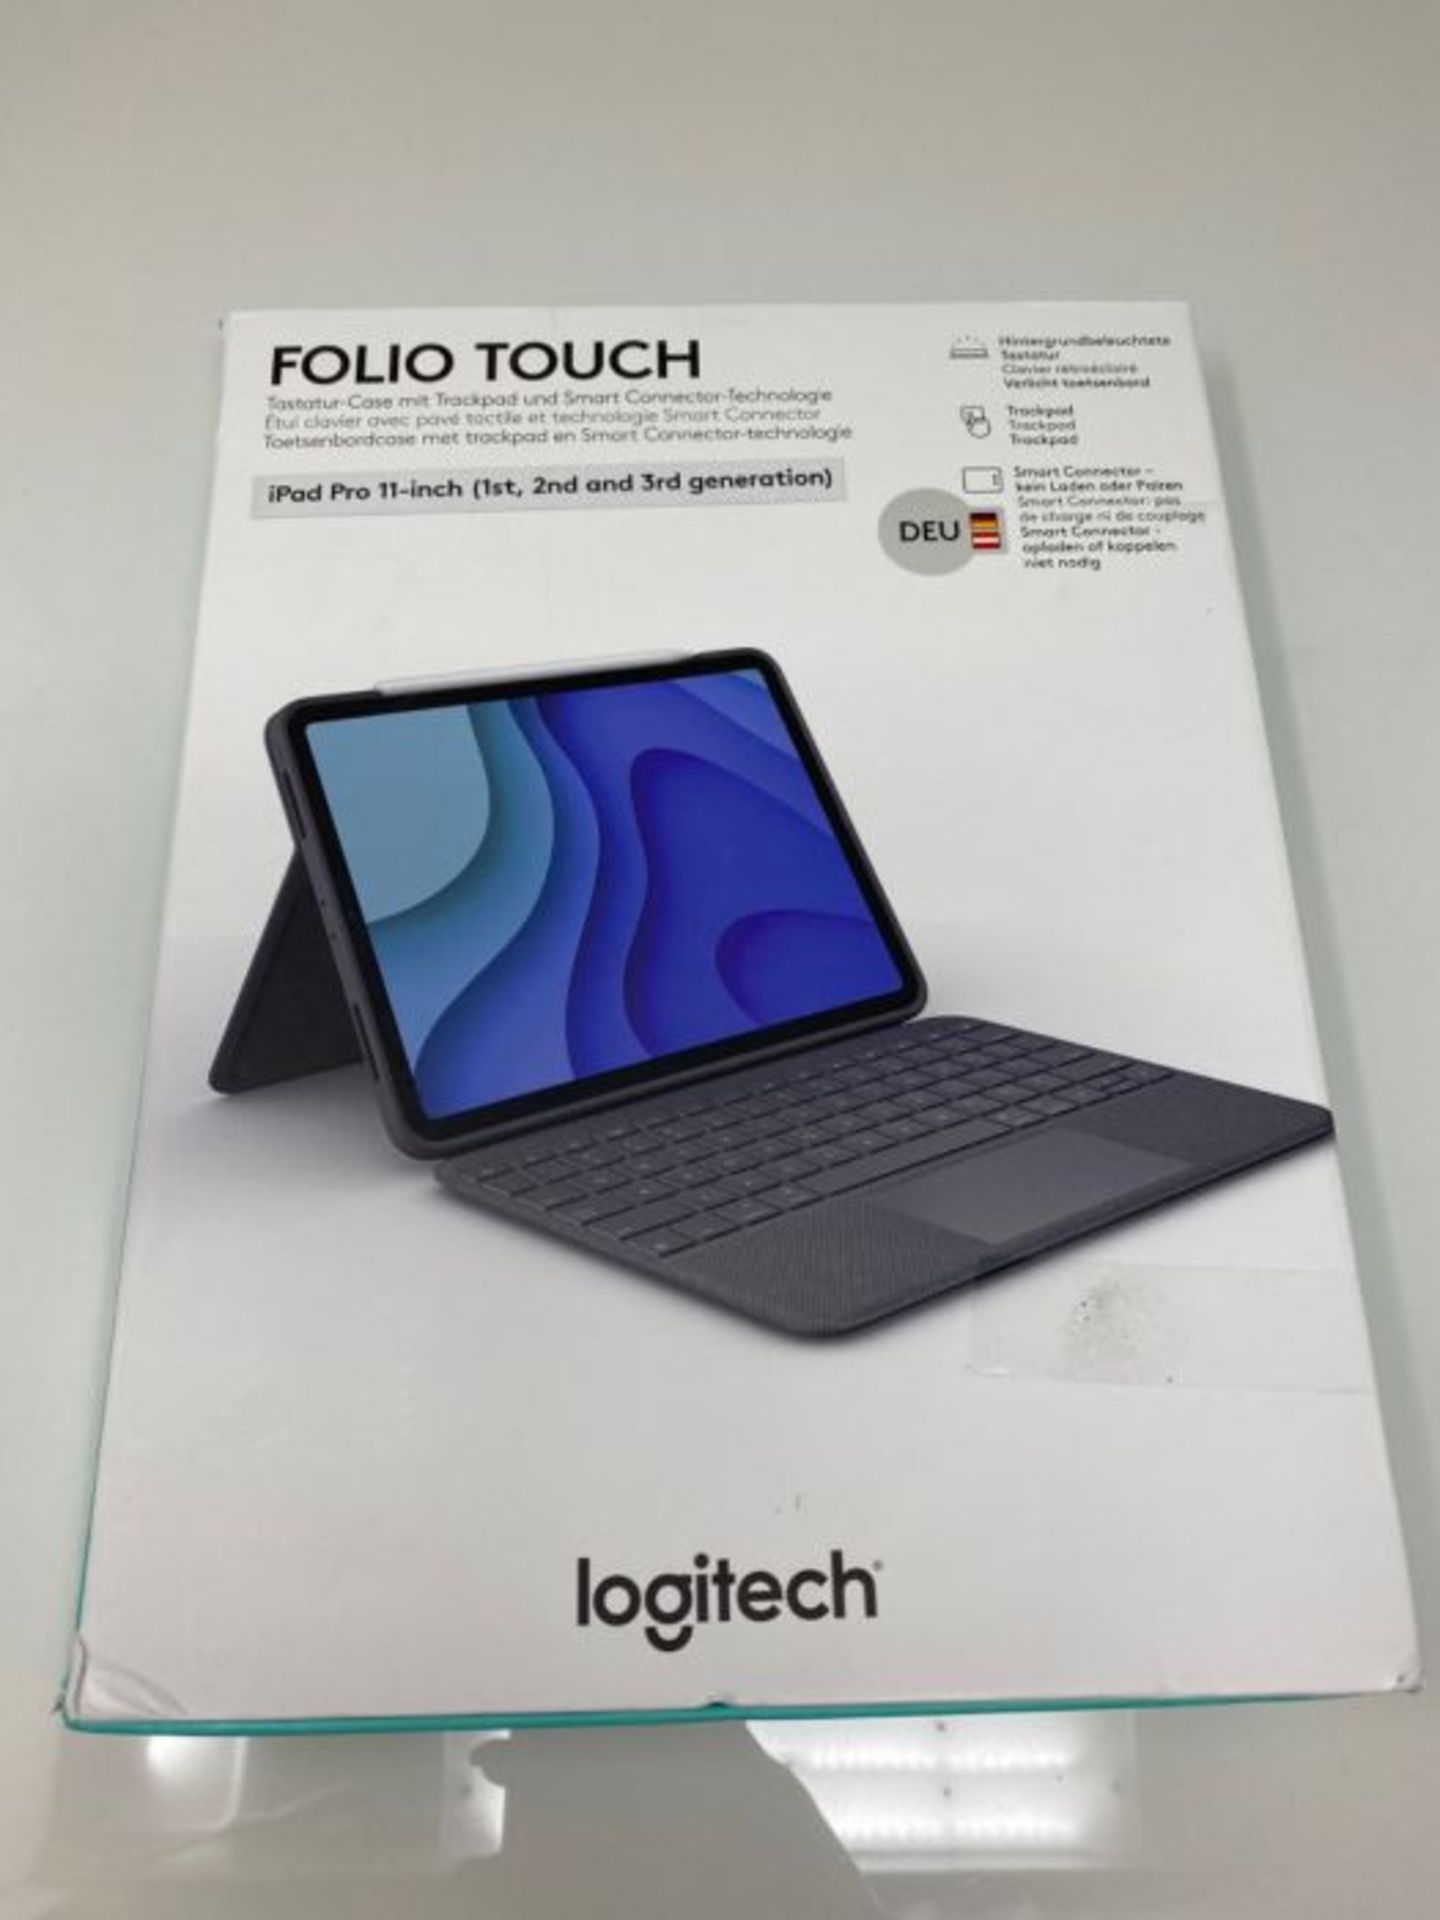 RRP £115.00 Logitech Folio Touch iPad Keyboard Case, QWERTZ German layout - Graphite - Image 2 of 3